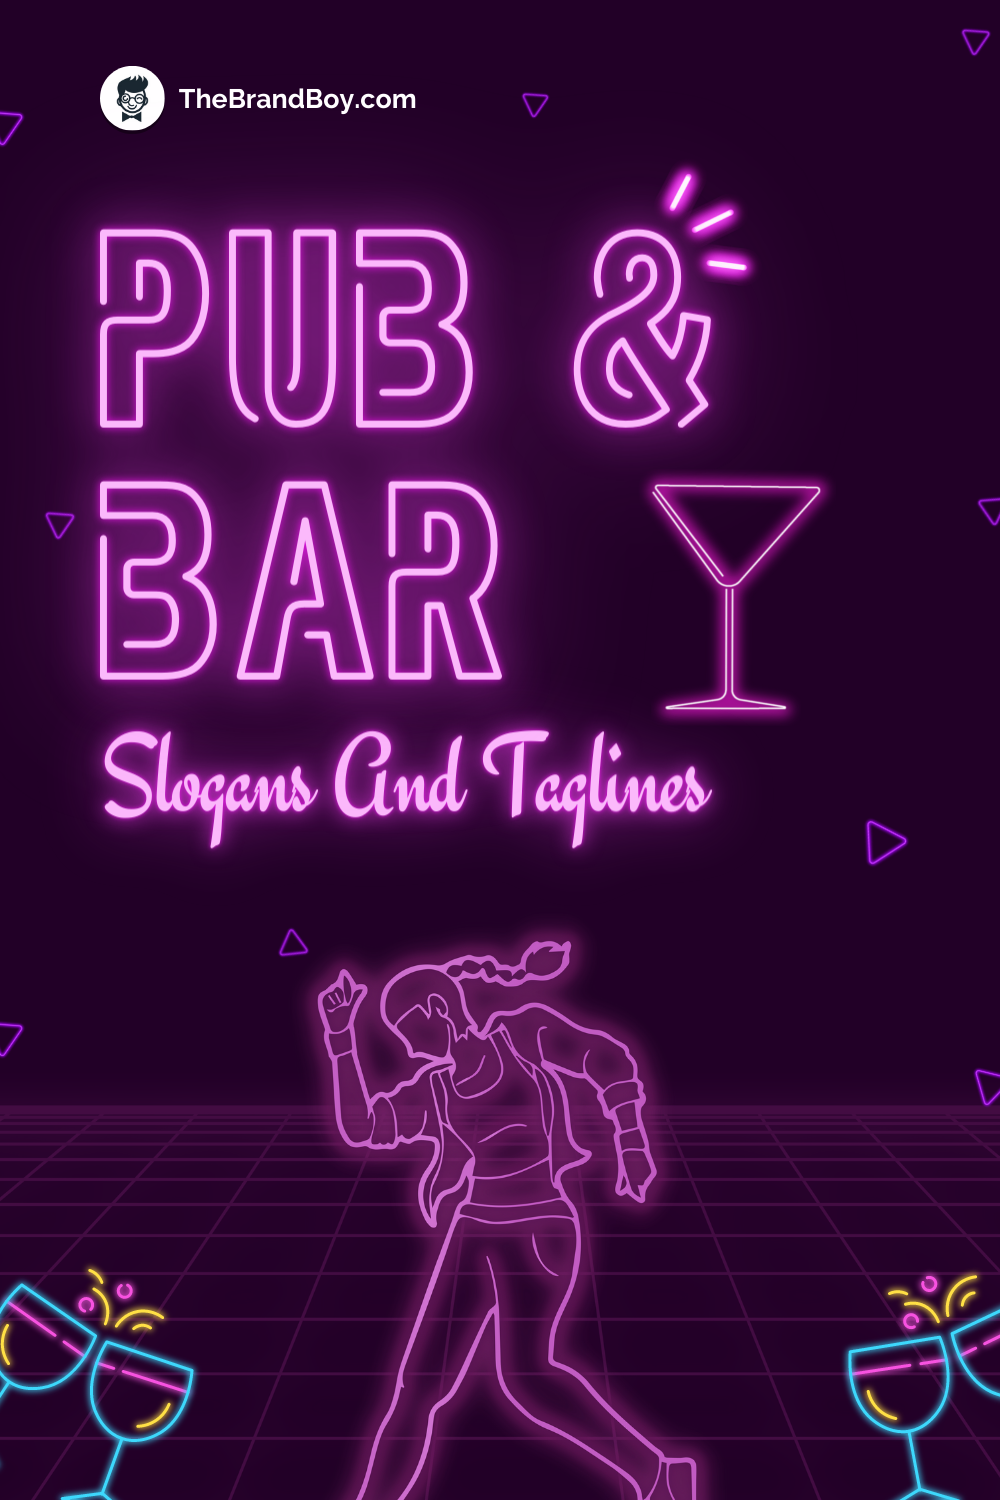 955+ Catchy Pub And Bar Slogans and Taglines - BrandBoy